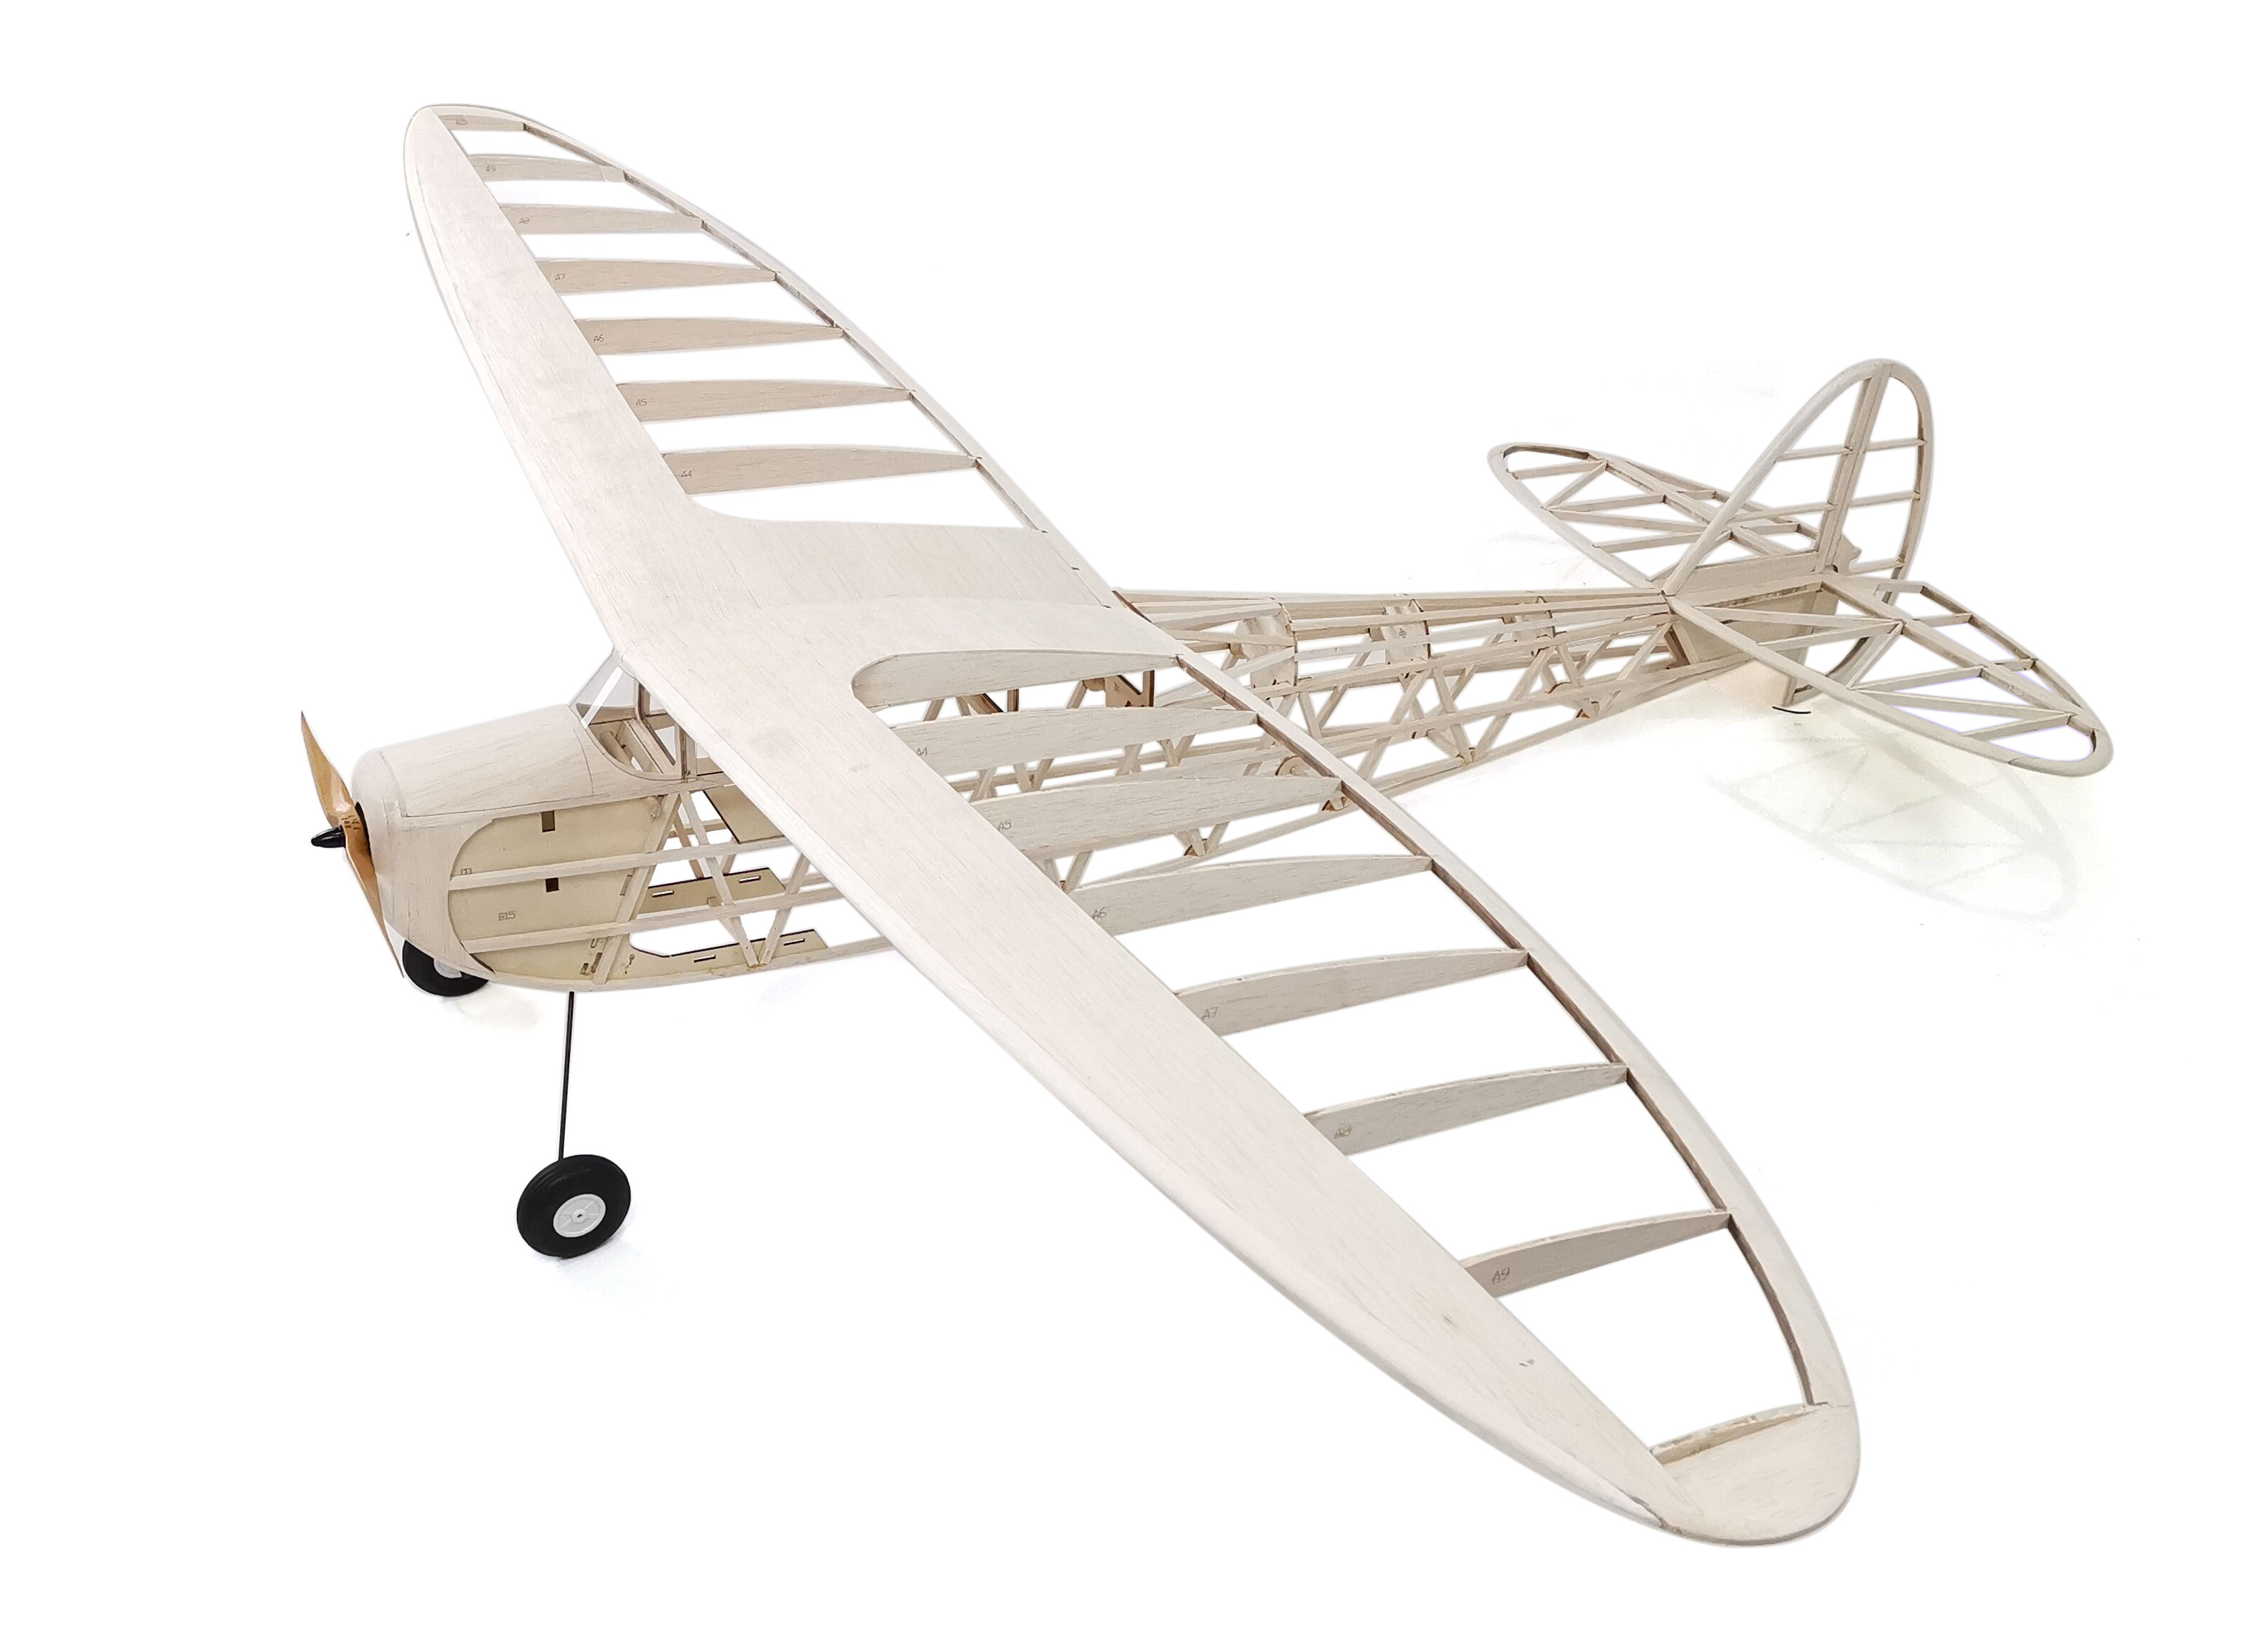 large rc airplane kits